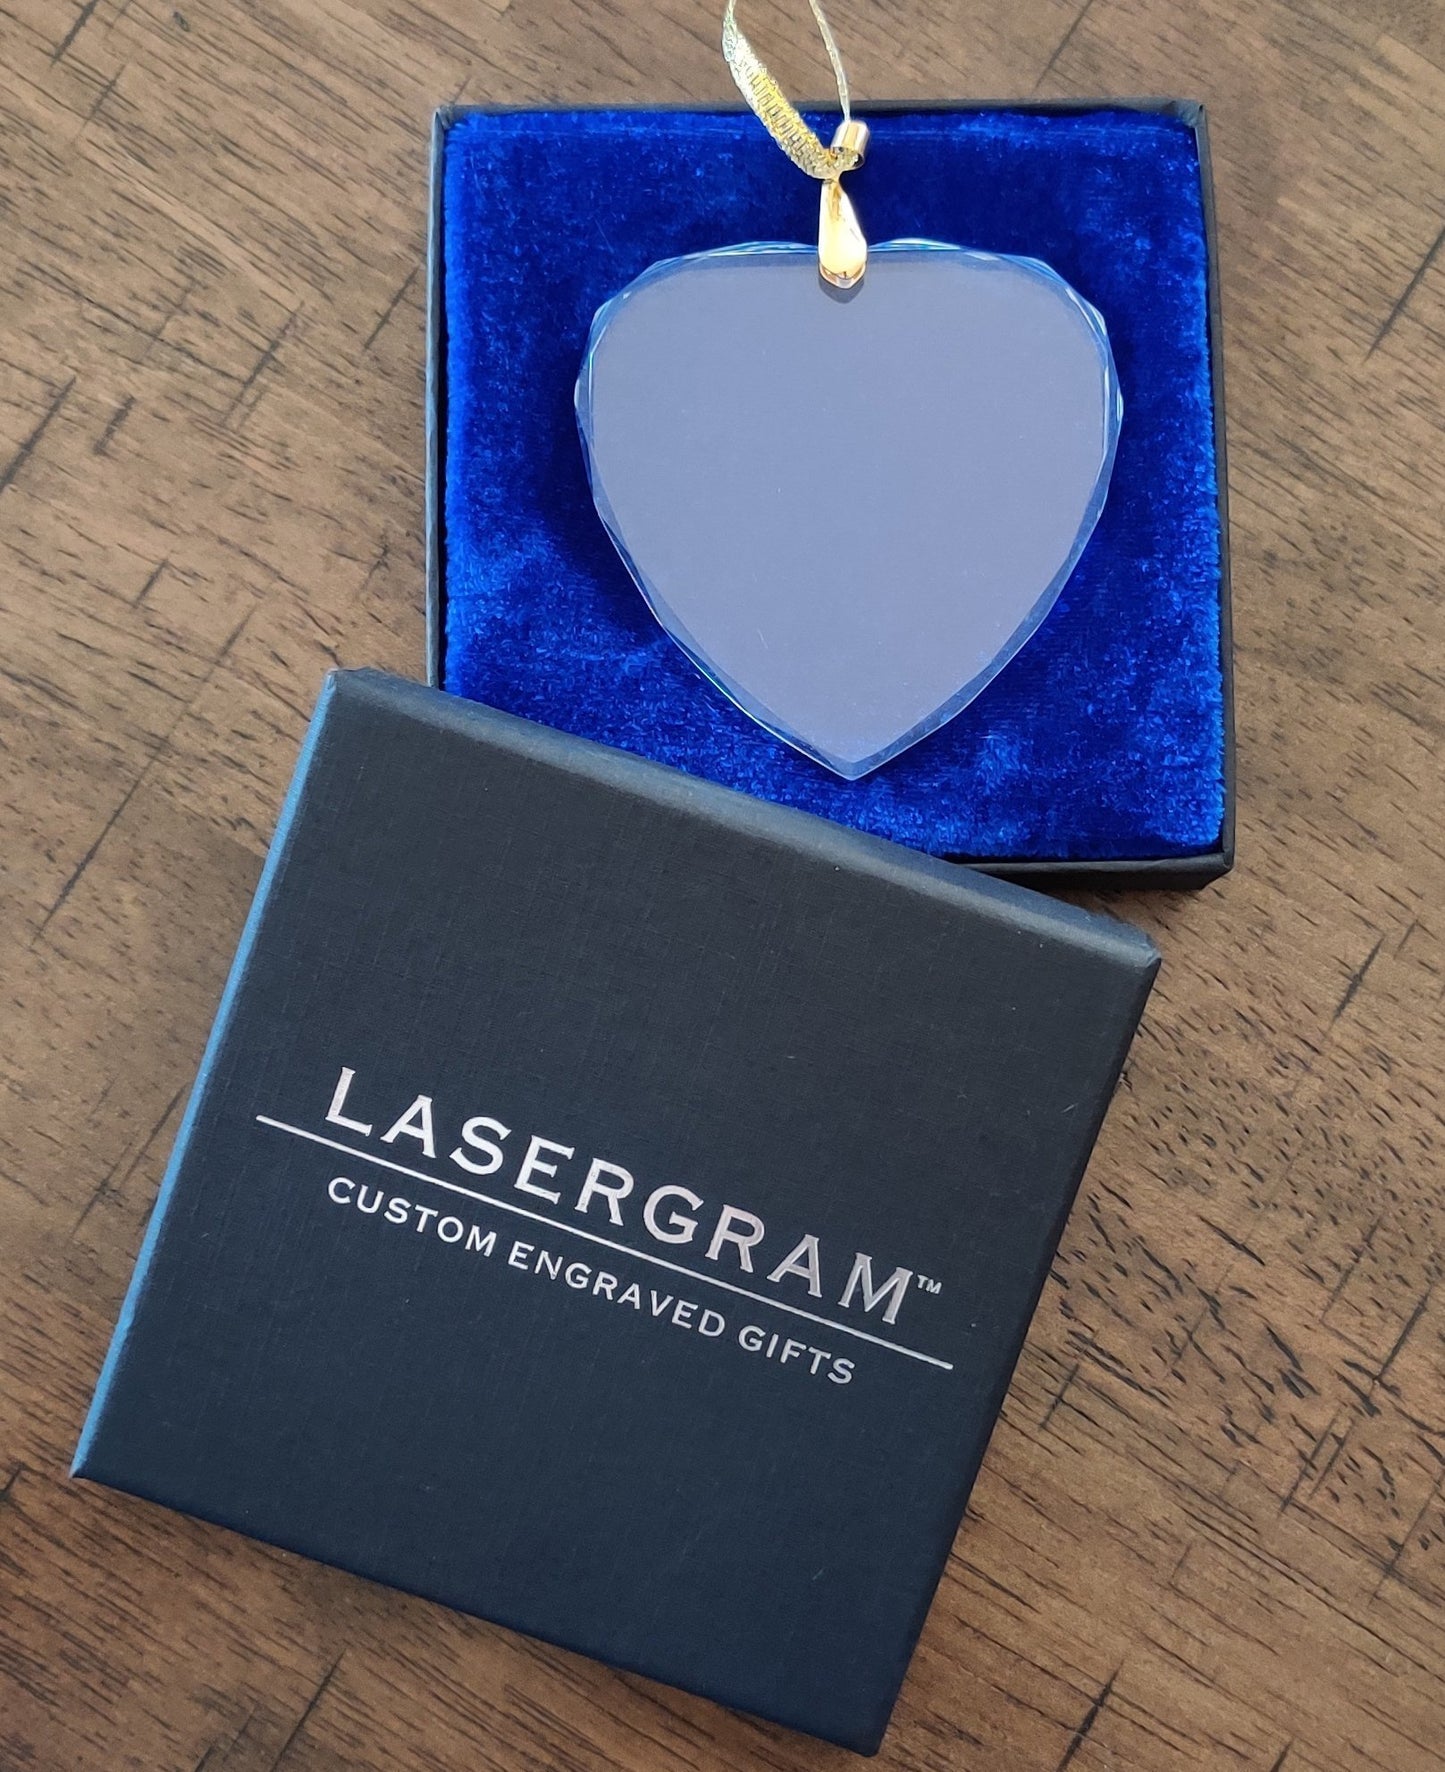 LaserGram Christmas Ornament, Nephrology, Personalized Engraving Included (Heart Shape)